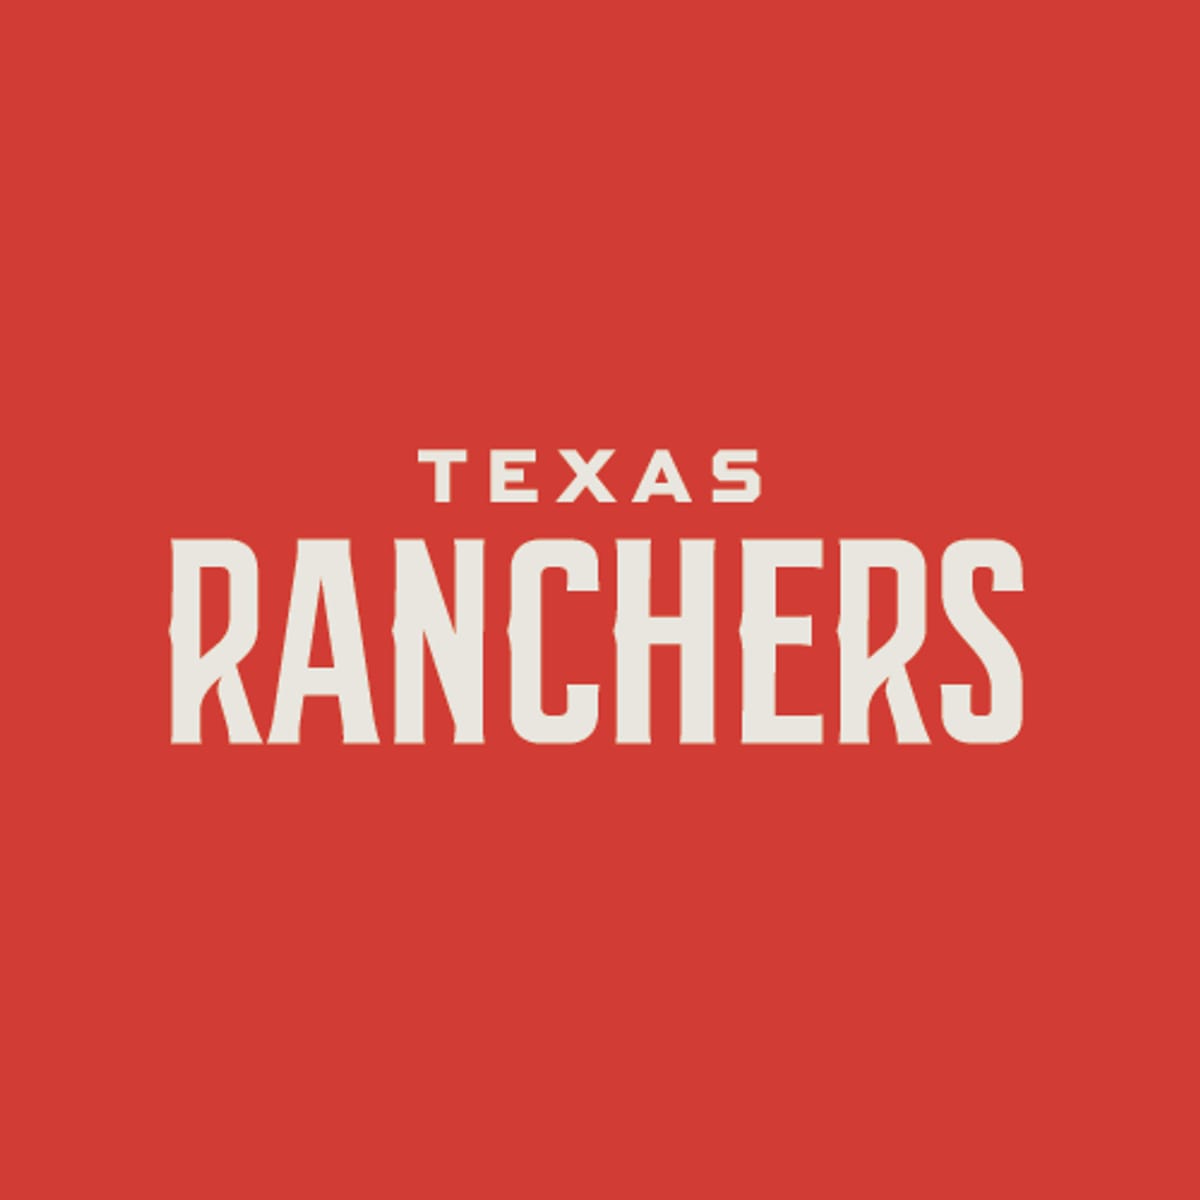 Texas Ranchers